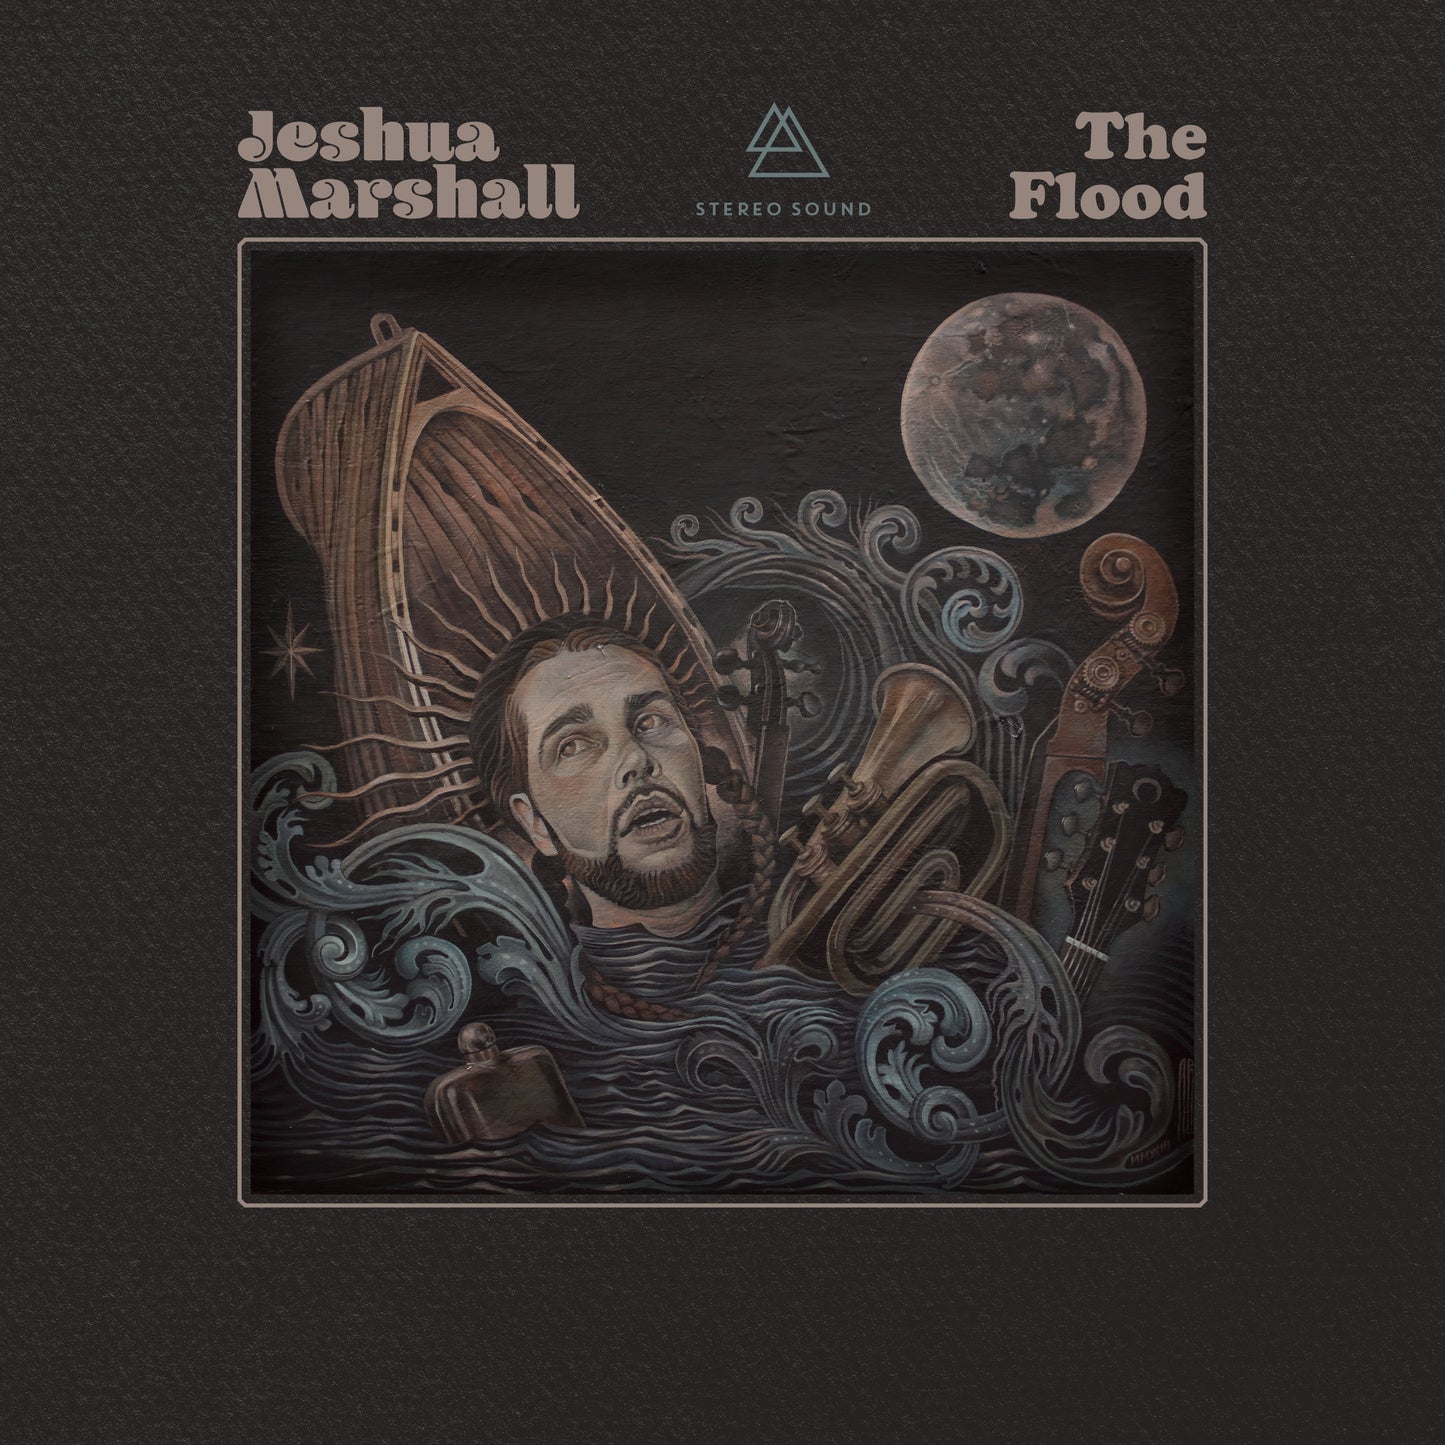 Jeshua Marshall - New Album- "The Flood" on Vinyl.